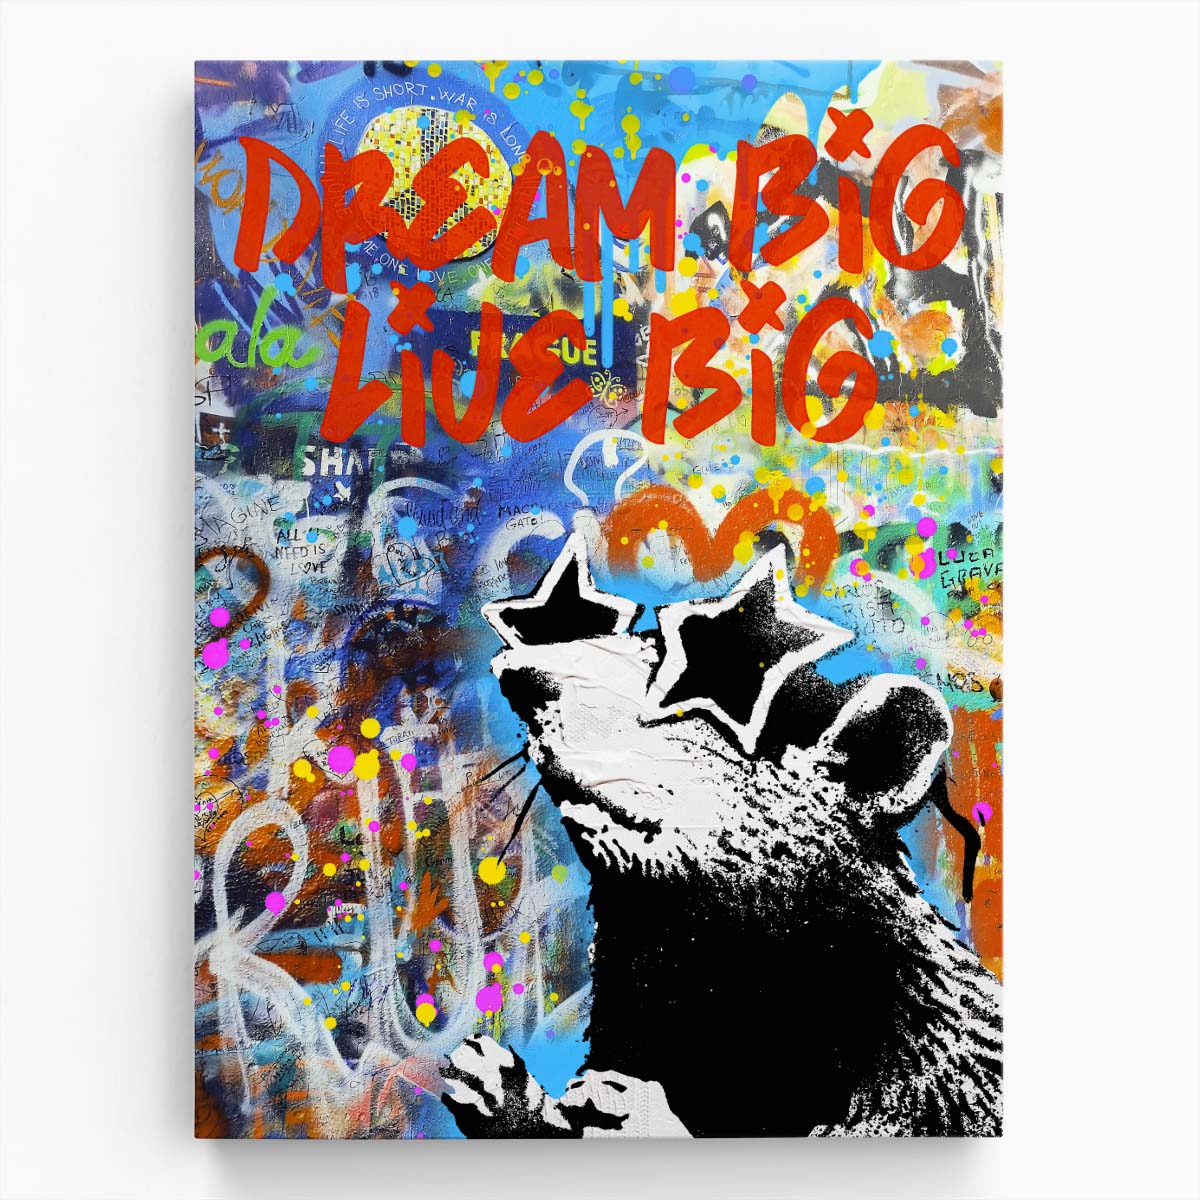 Dream Big Live Big Graffiti Wall Art by Luxuriance Designs. Made in USA.